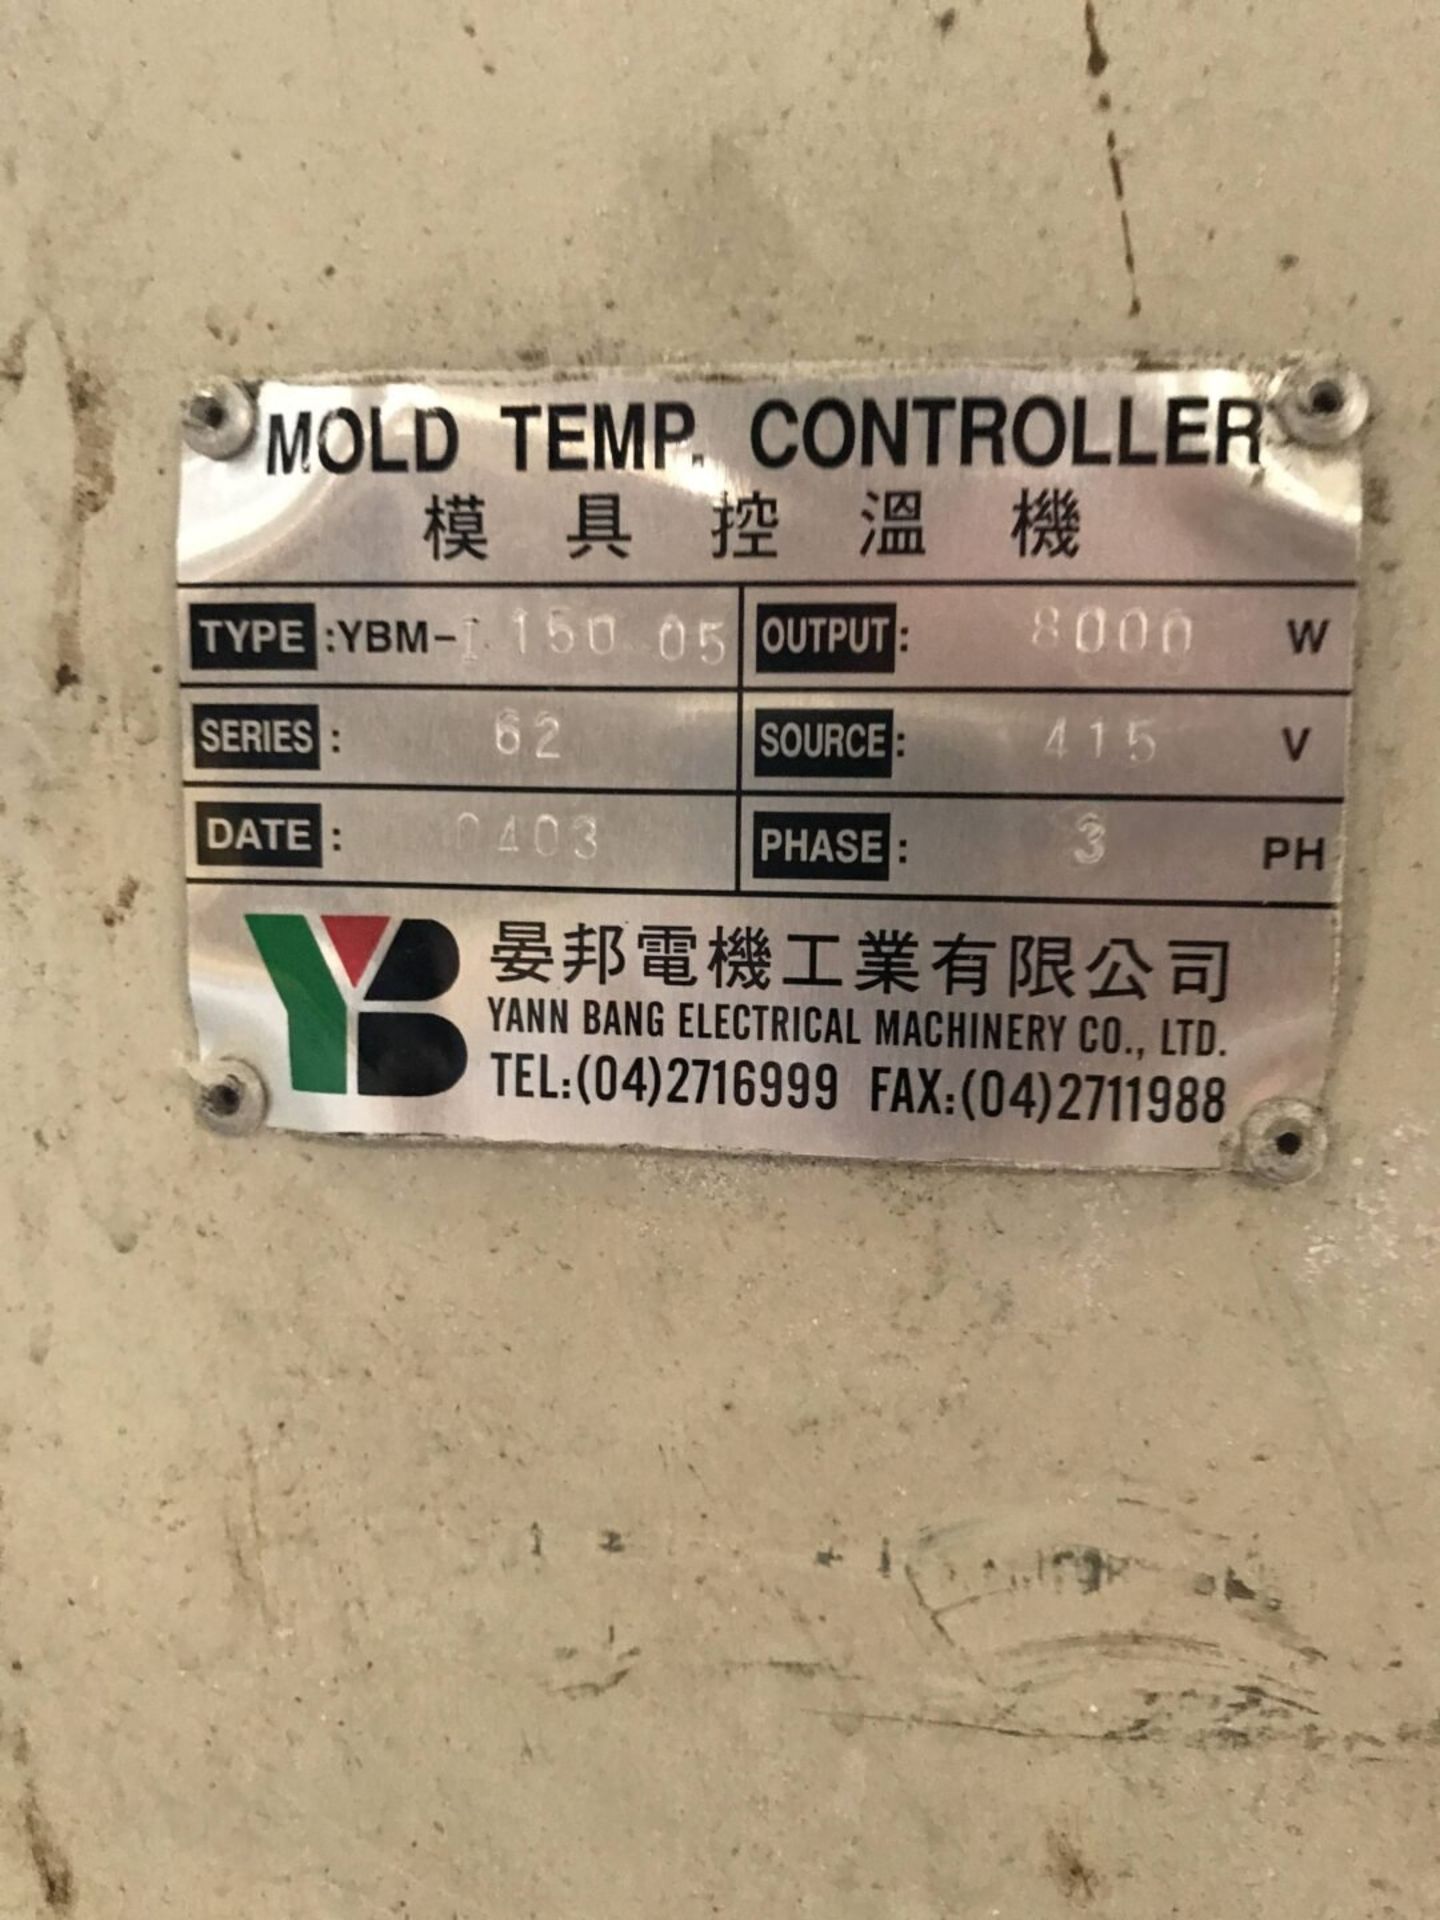 Yann Bang Electrical YBM-L150 05 Mold Temp Control, S/N 62 - Image 4 of 5